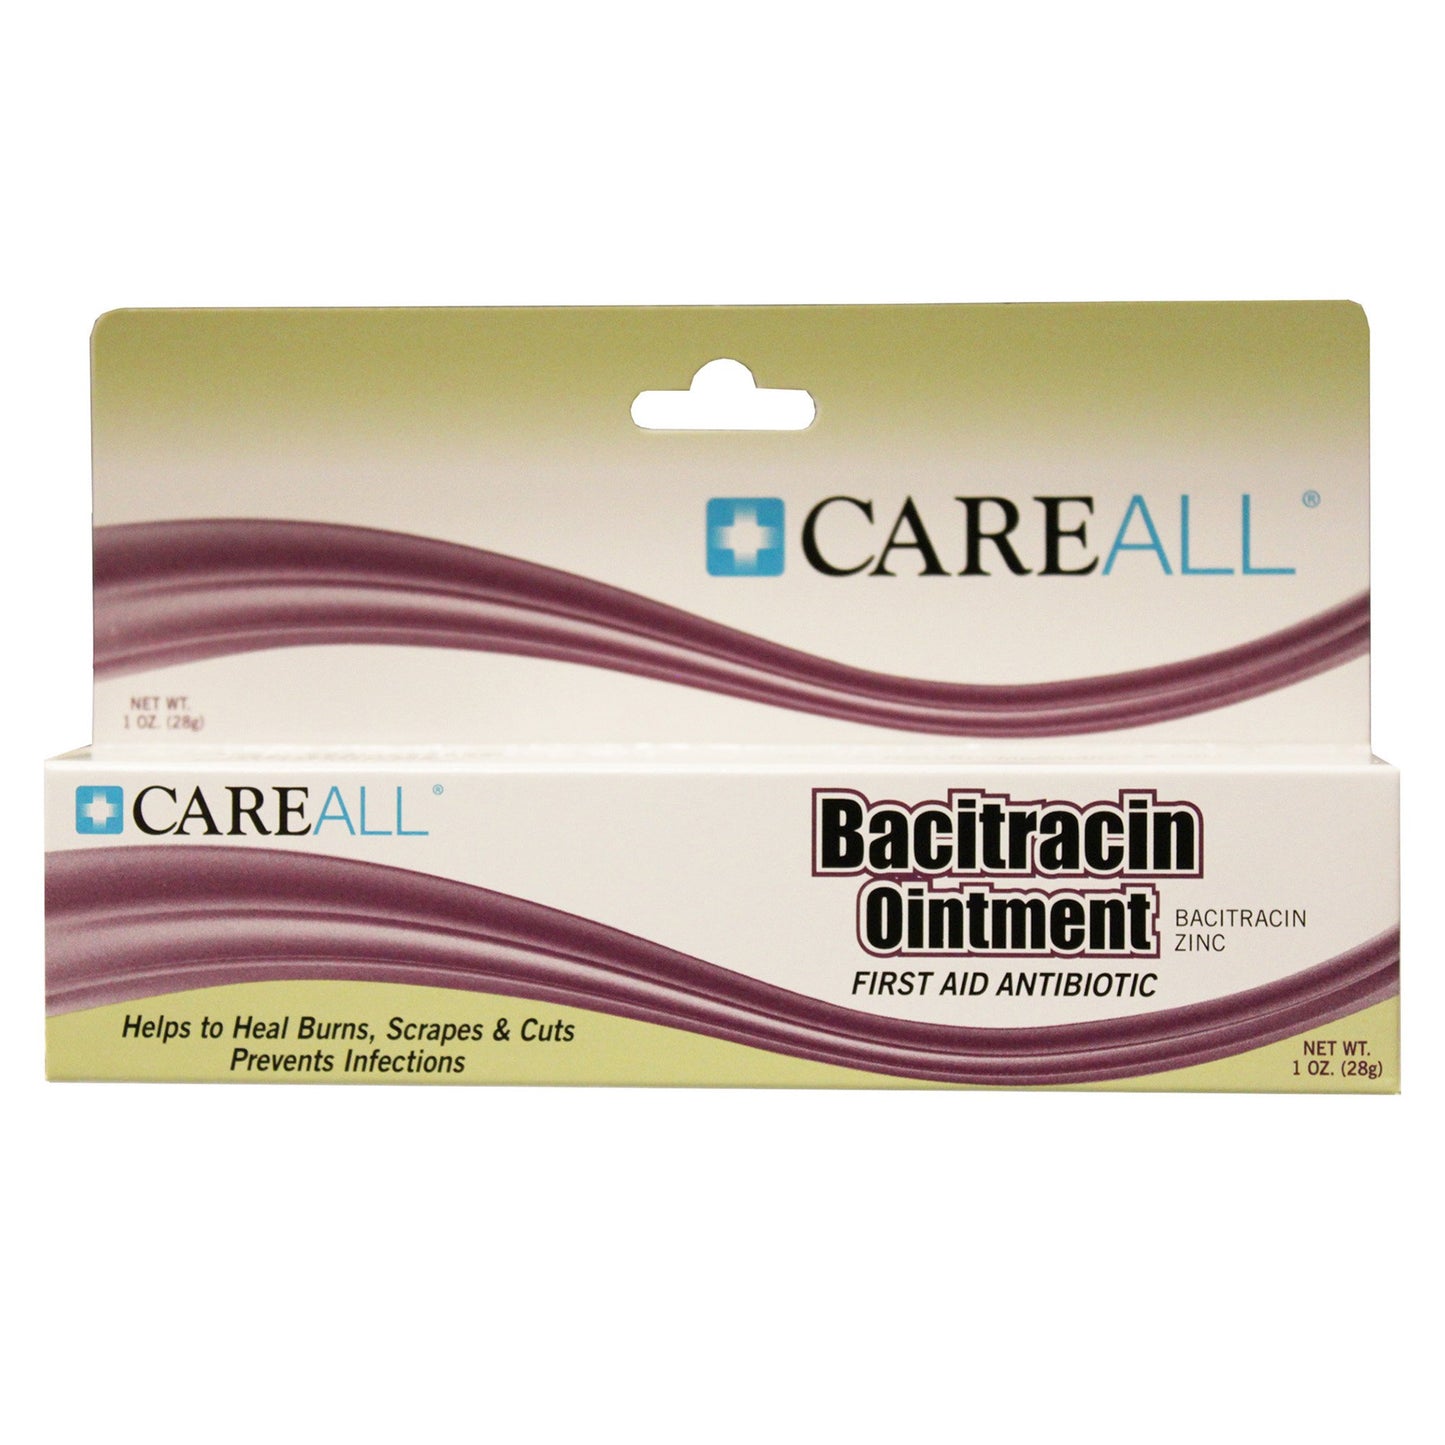 CareALL® Bacitracin First Aid Antibiotic, 1 oz. Tube